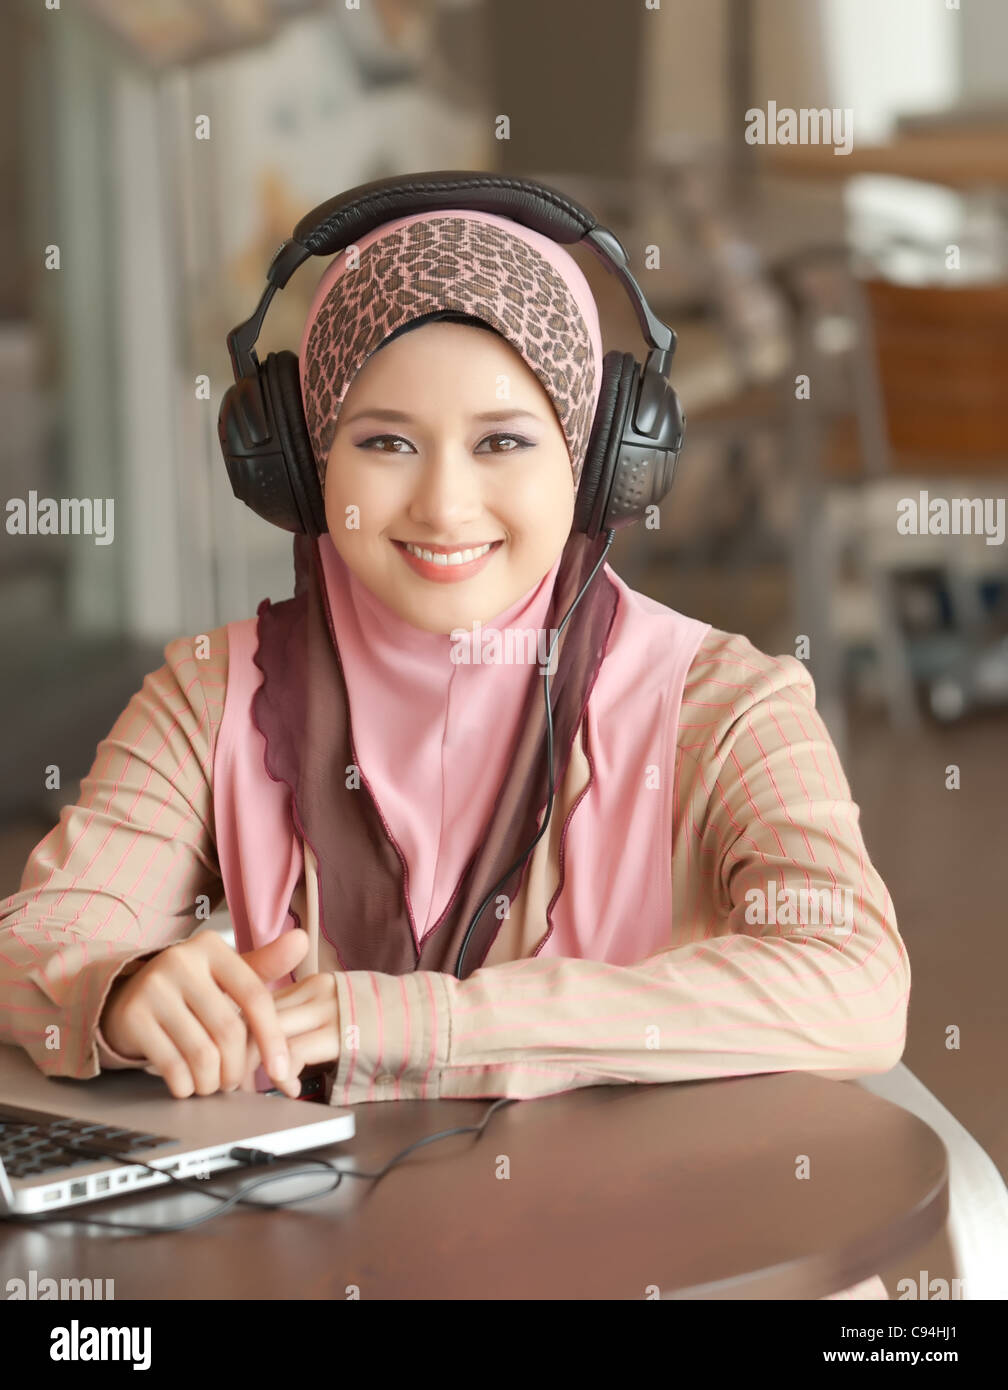 Muslim young girl wearing headphone on the coffee table Stock Photo